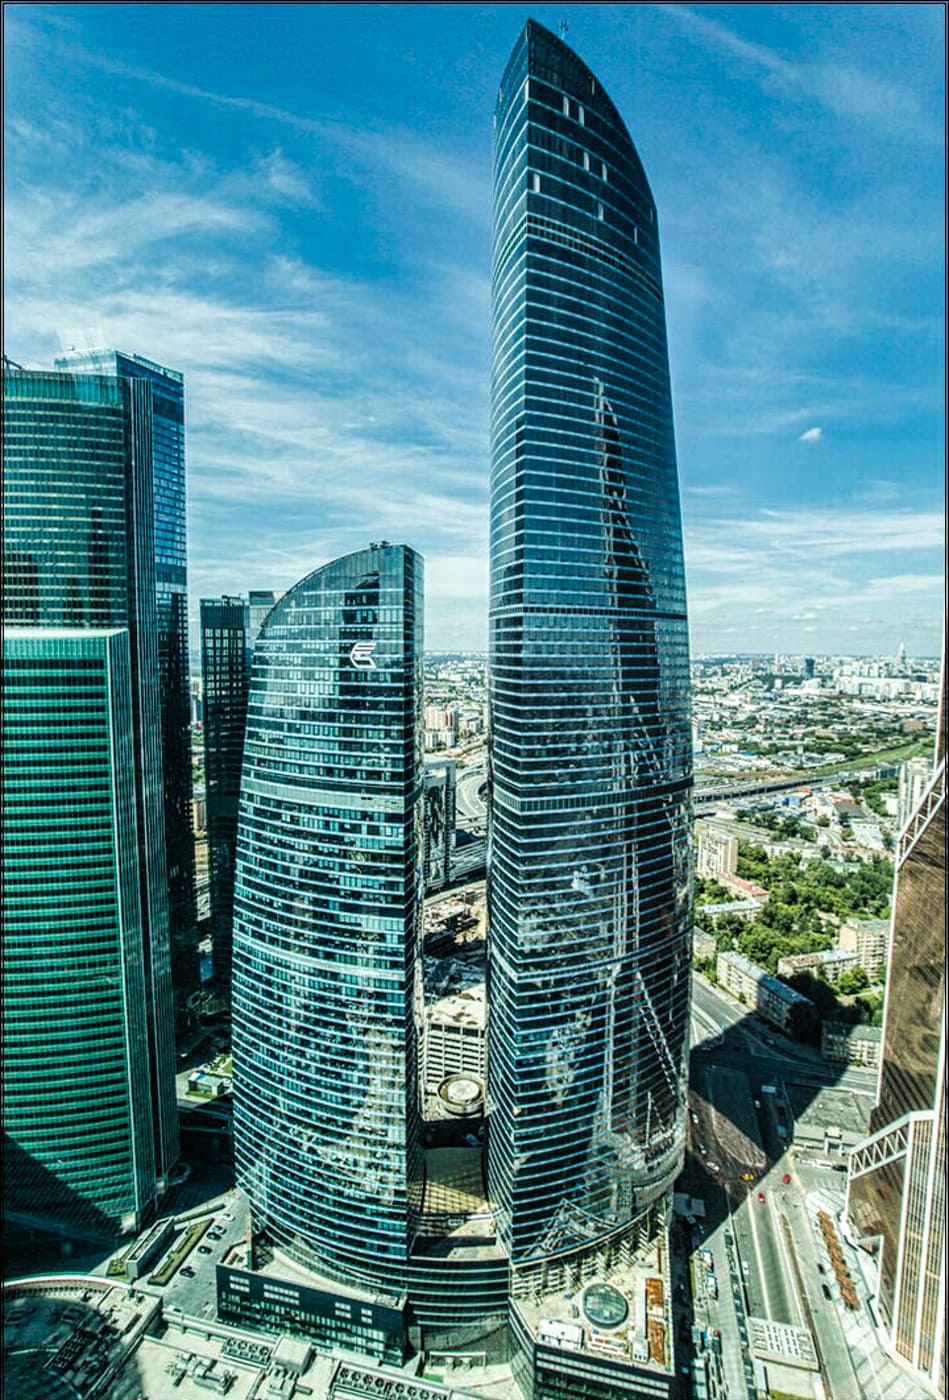 Federation Tower in Moscow / Bild: Igor3188 CC BY-SA 4.0